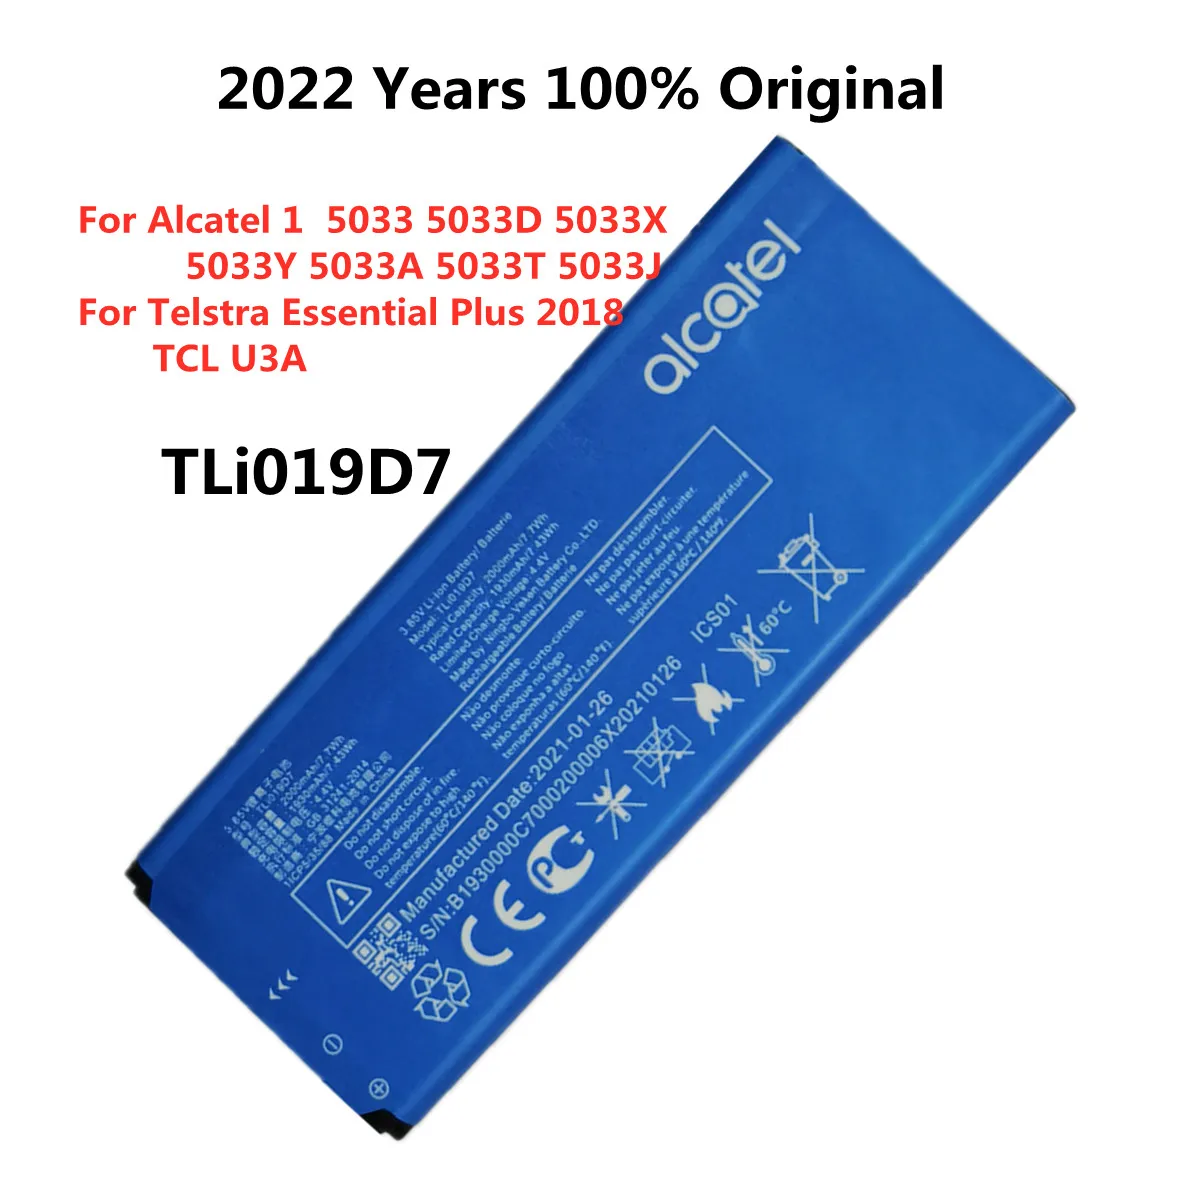 

Original 2000mAh TLi019D7 Battery For Alcatel 1 5033 5033D 5033X 5033Y 5033A 5033T 5033J /Telstra Essential Plus 2018/TCL U3A